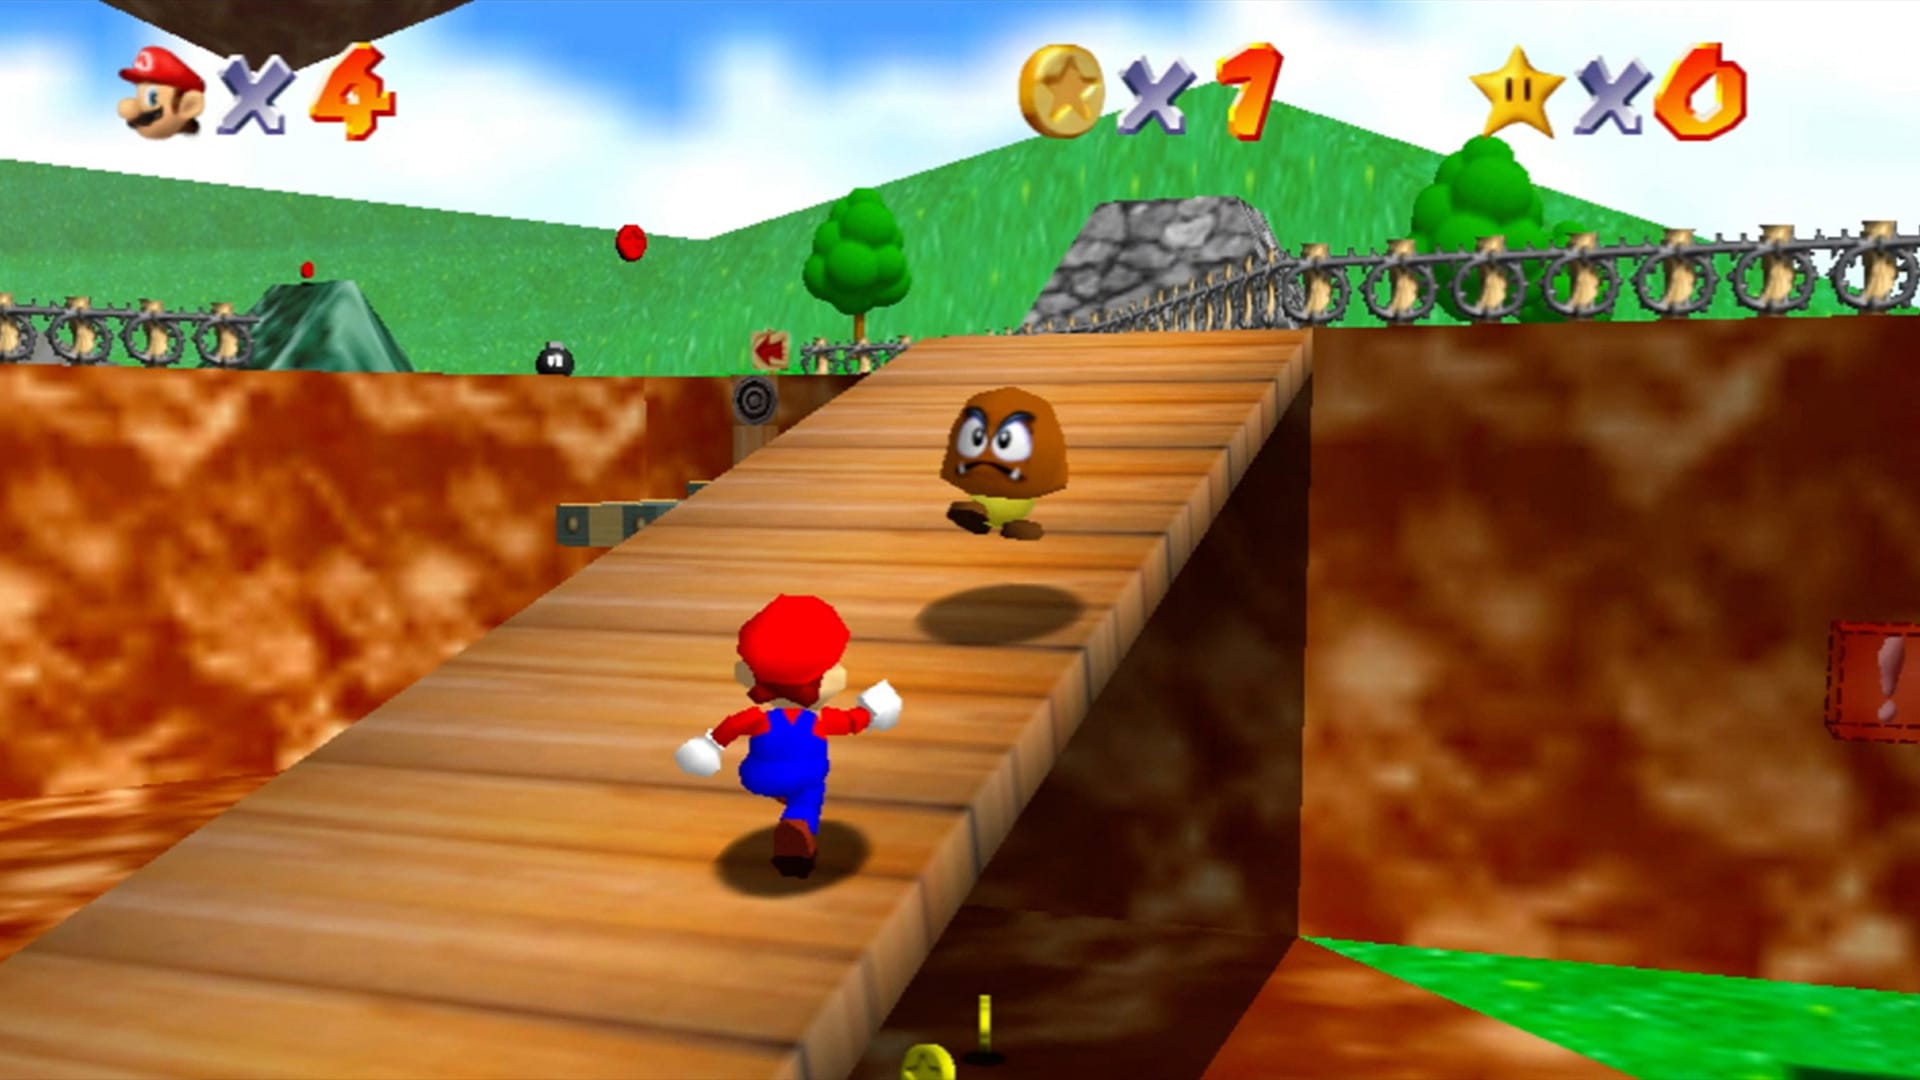 What made Super Mario 64 so special?, super mario 